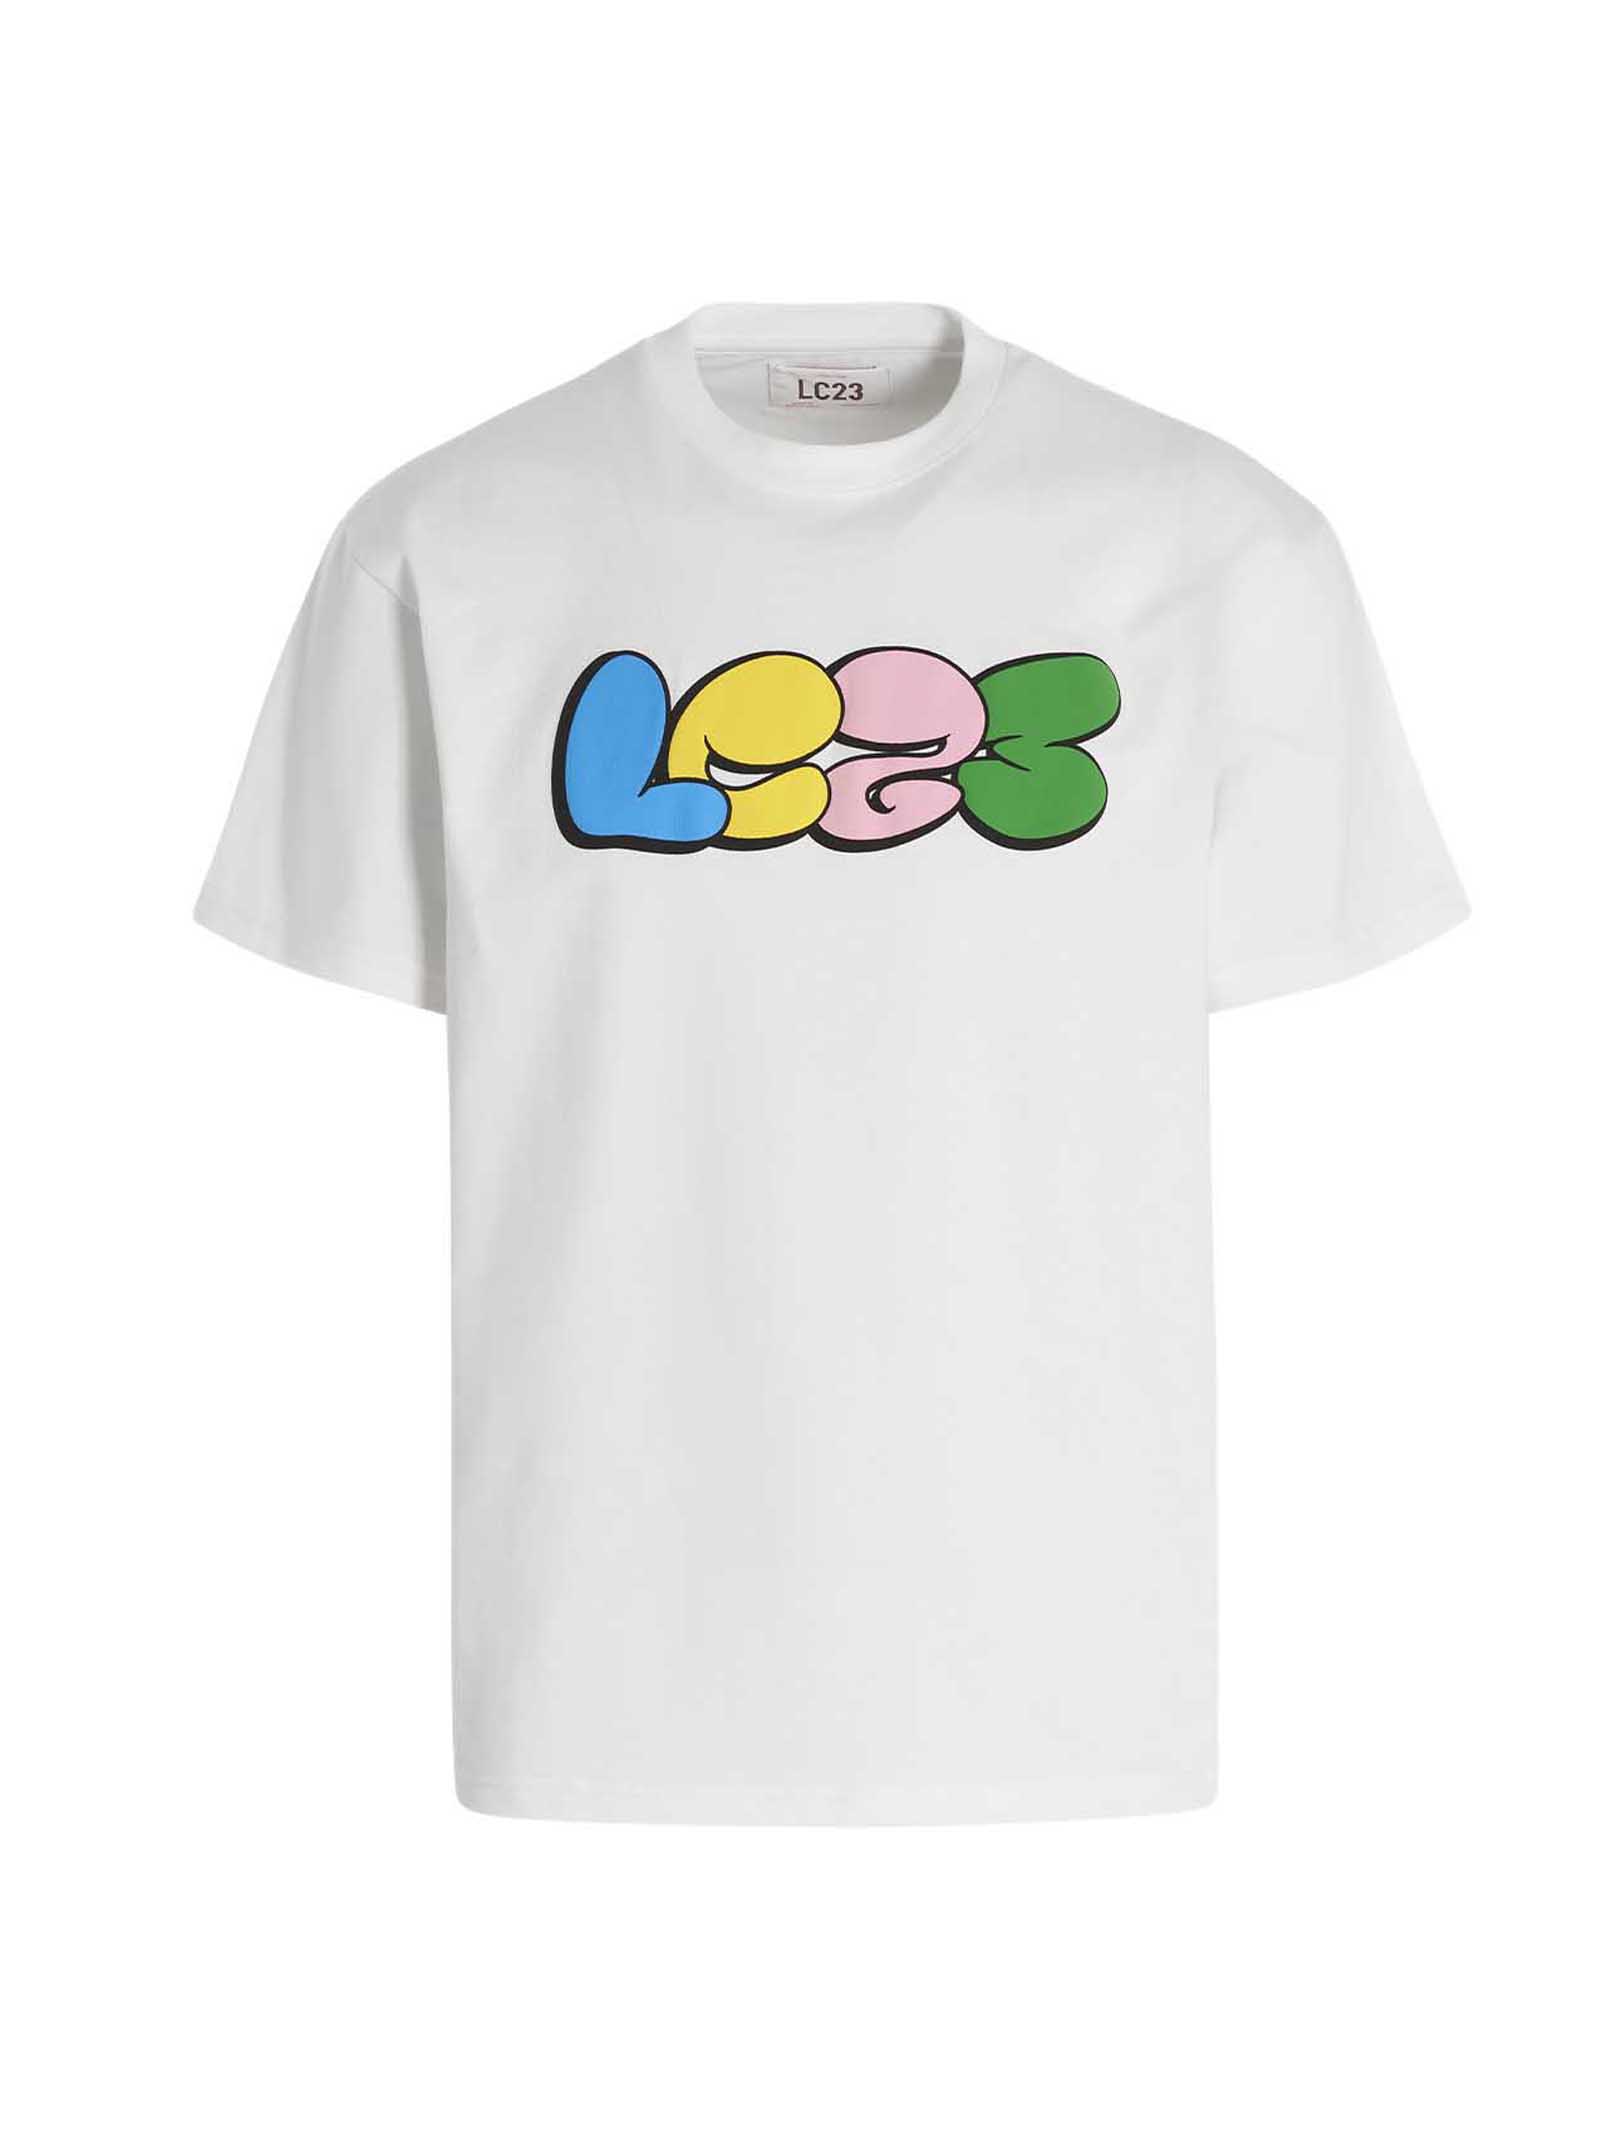 LC23 graffiti T-shirt